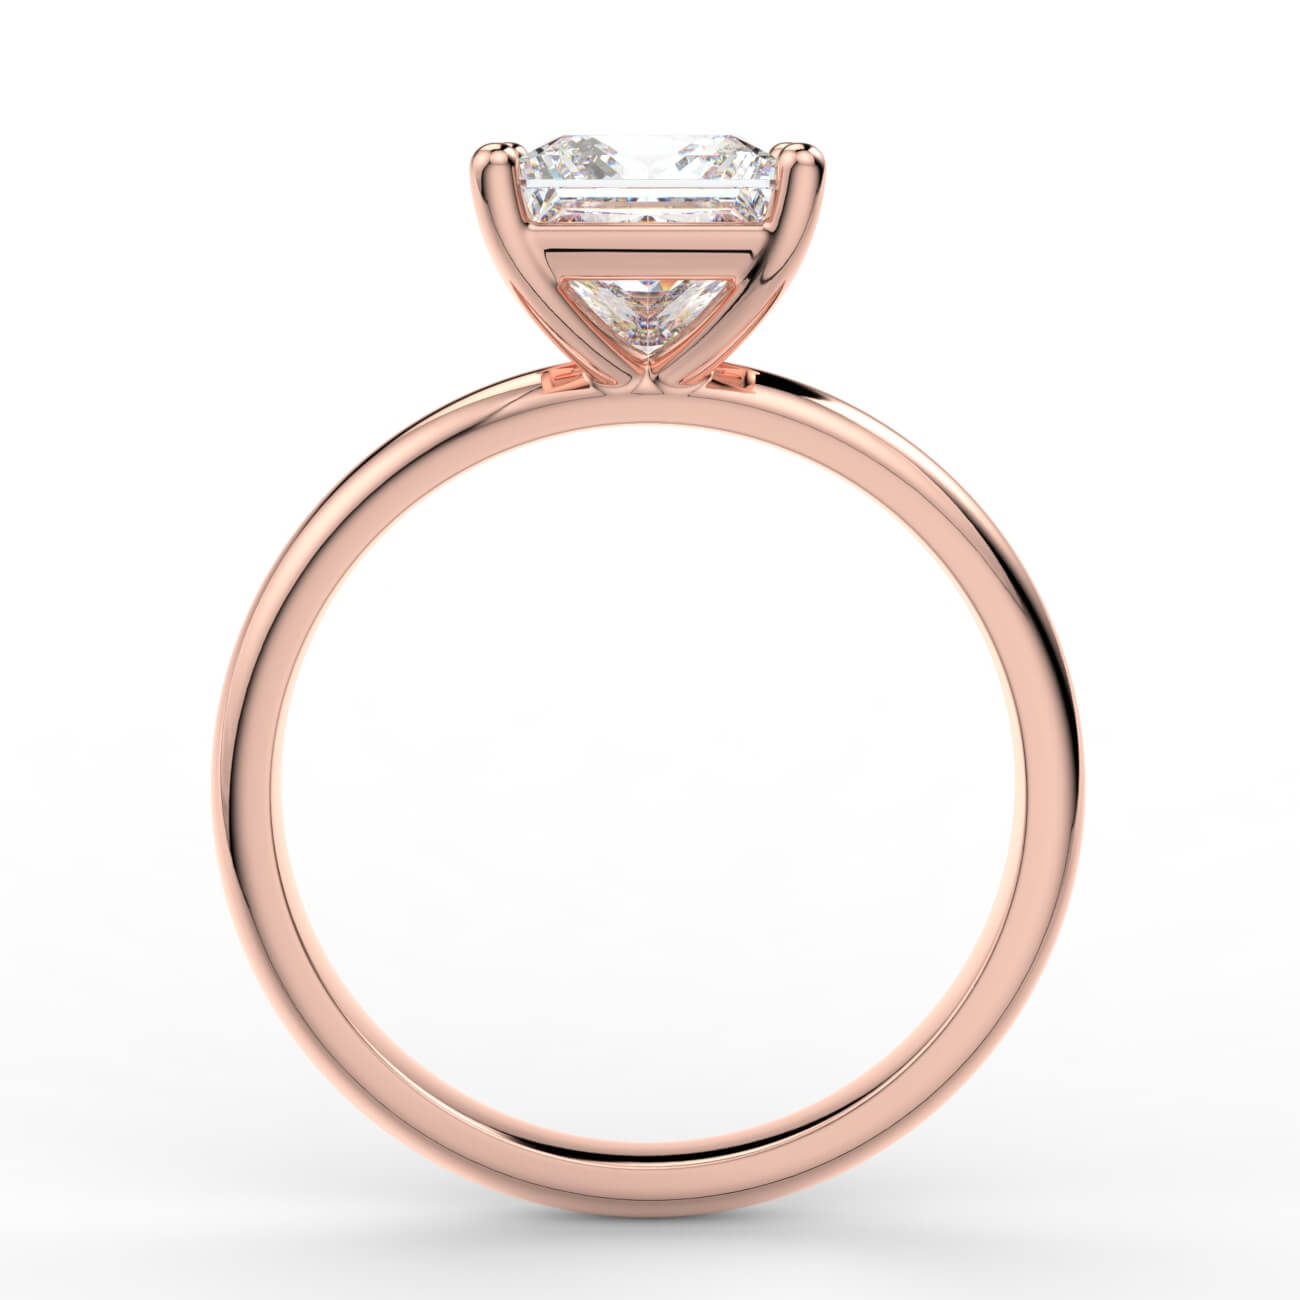 Solitaire princess cut diamond engagement ring in rose gold – Australian Diamond Network